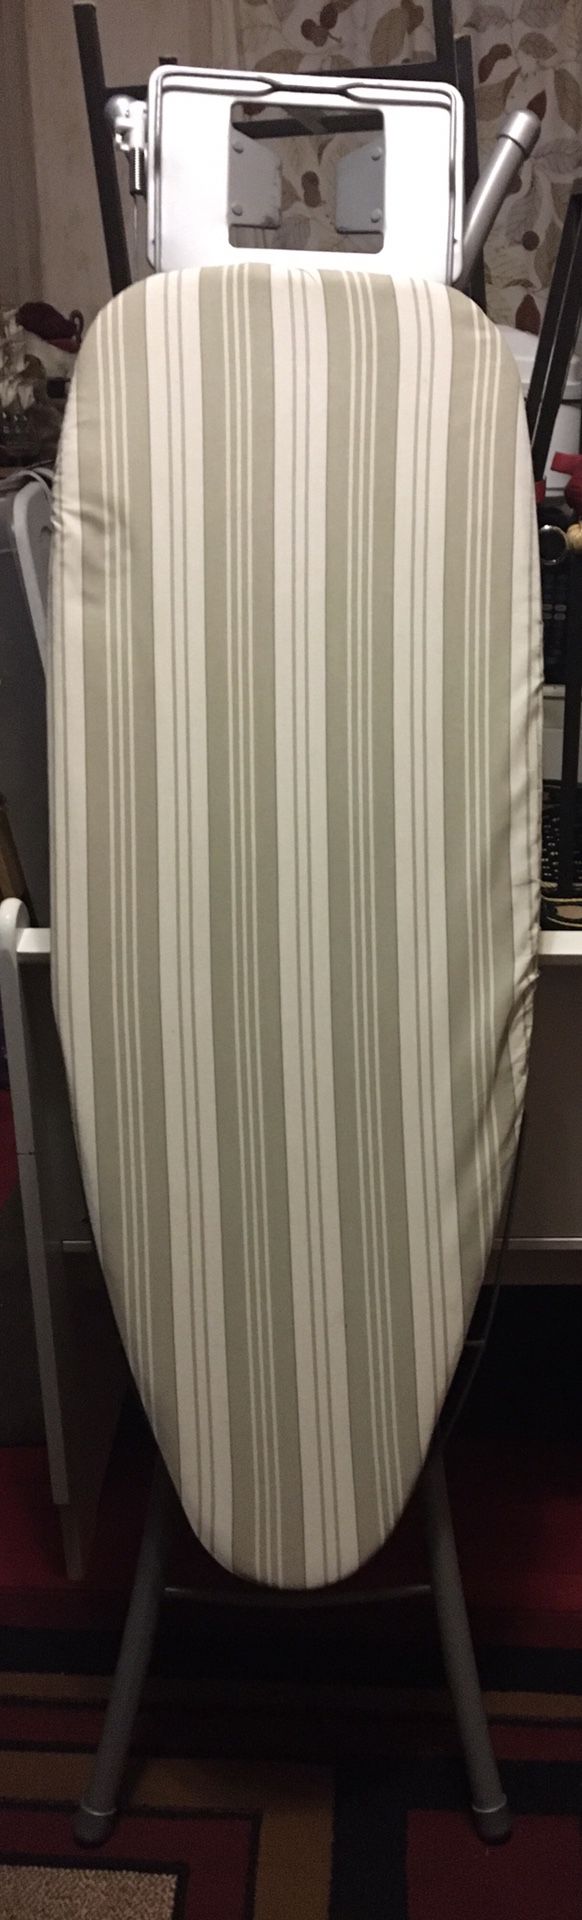 Large ironing board $35